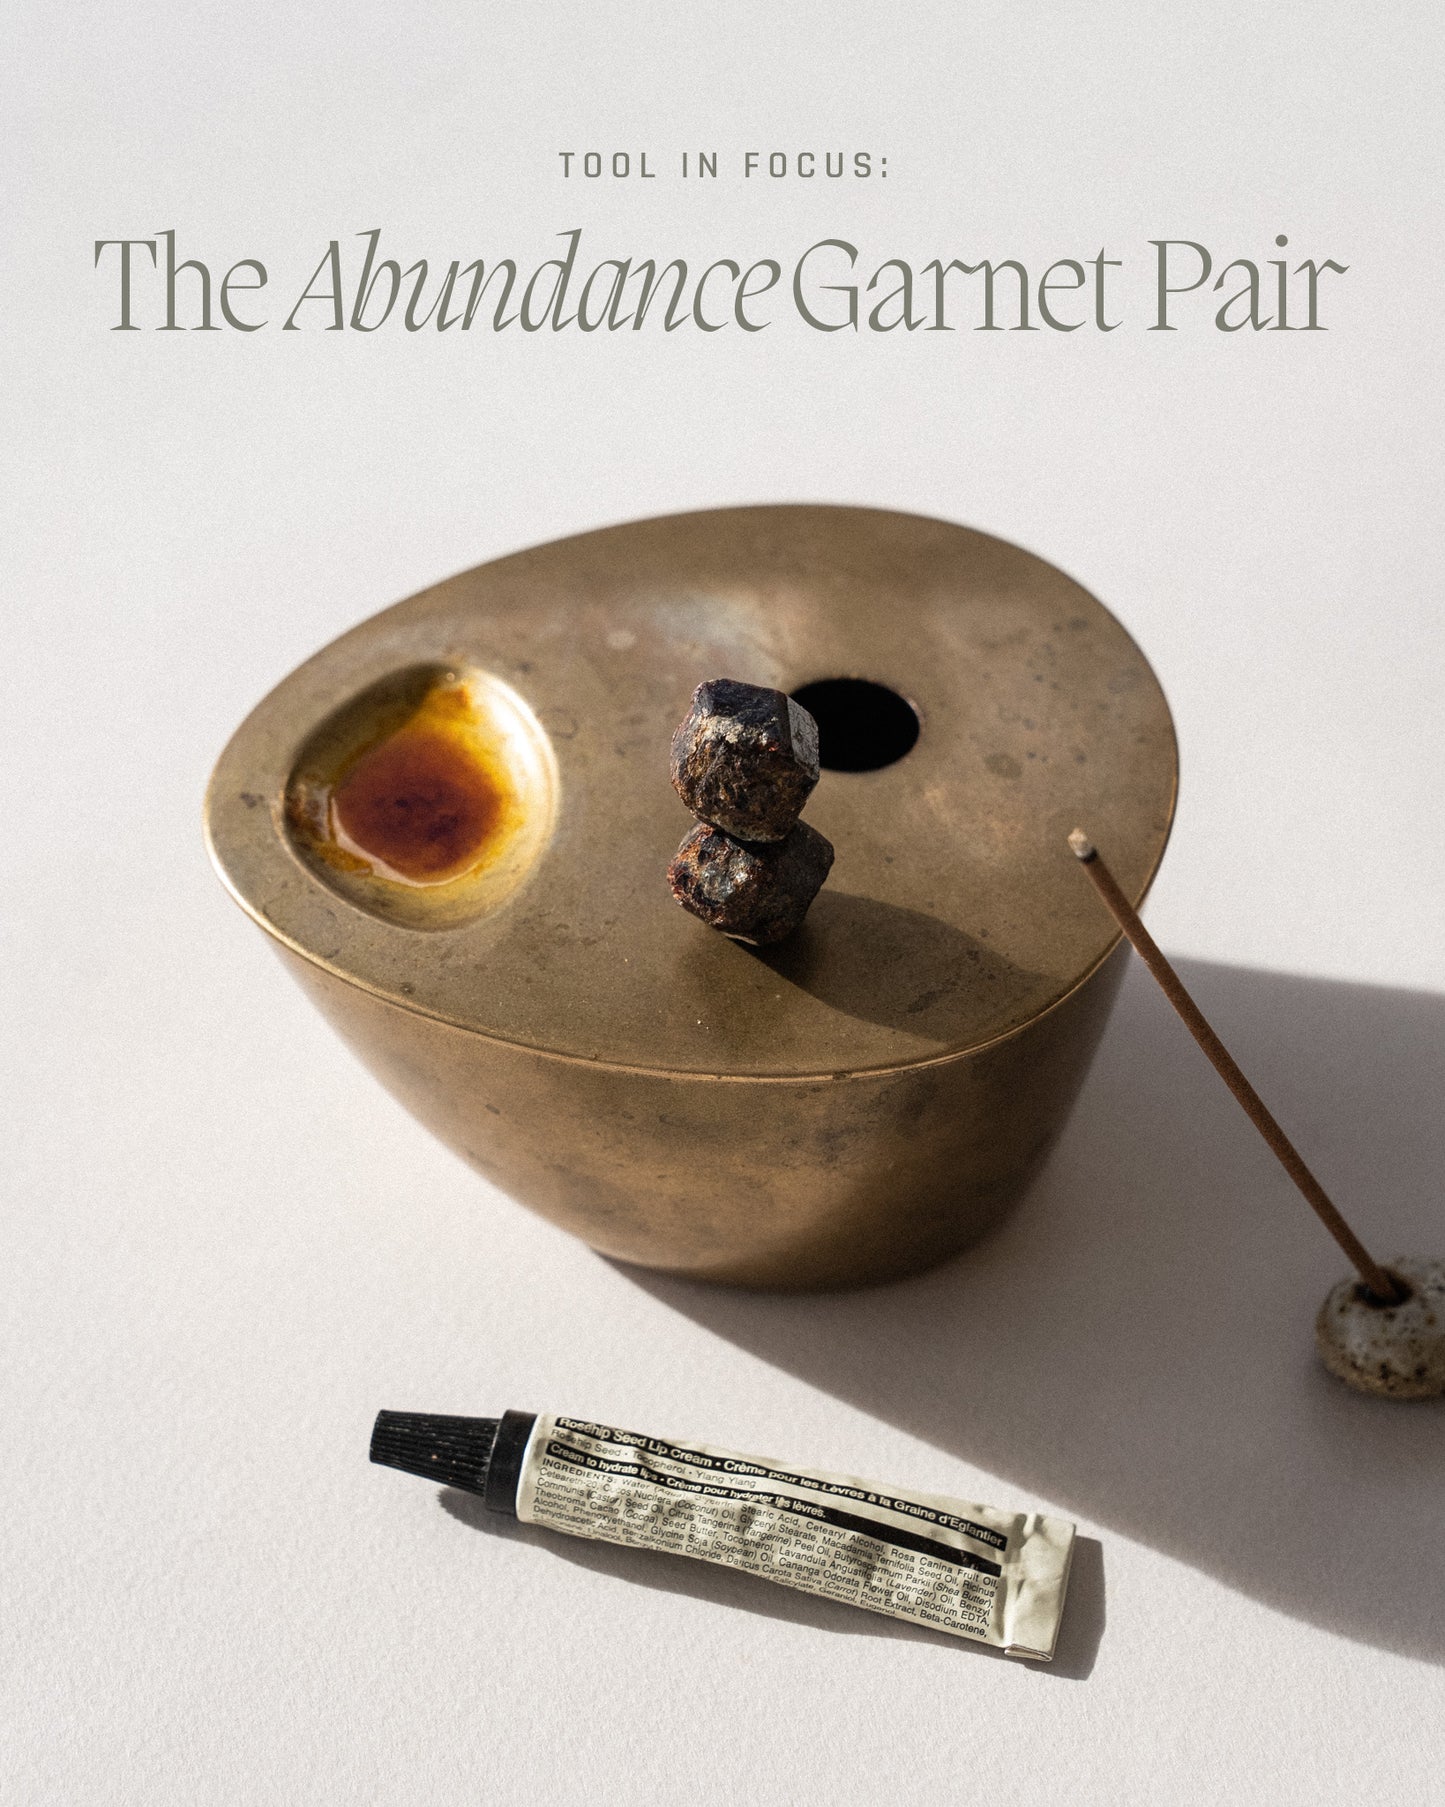 The Abundance Garnet Pair